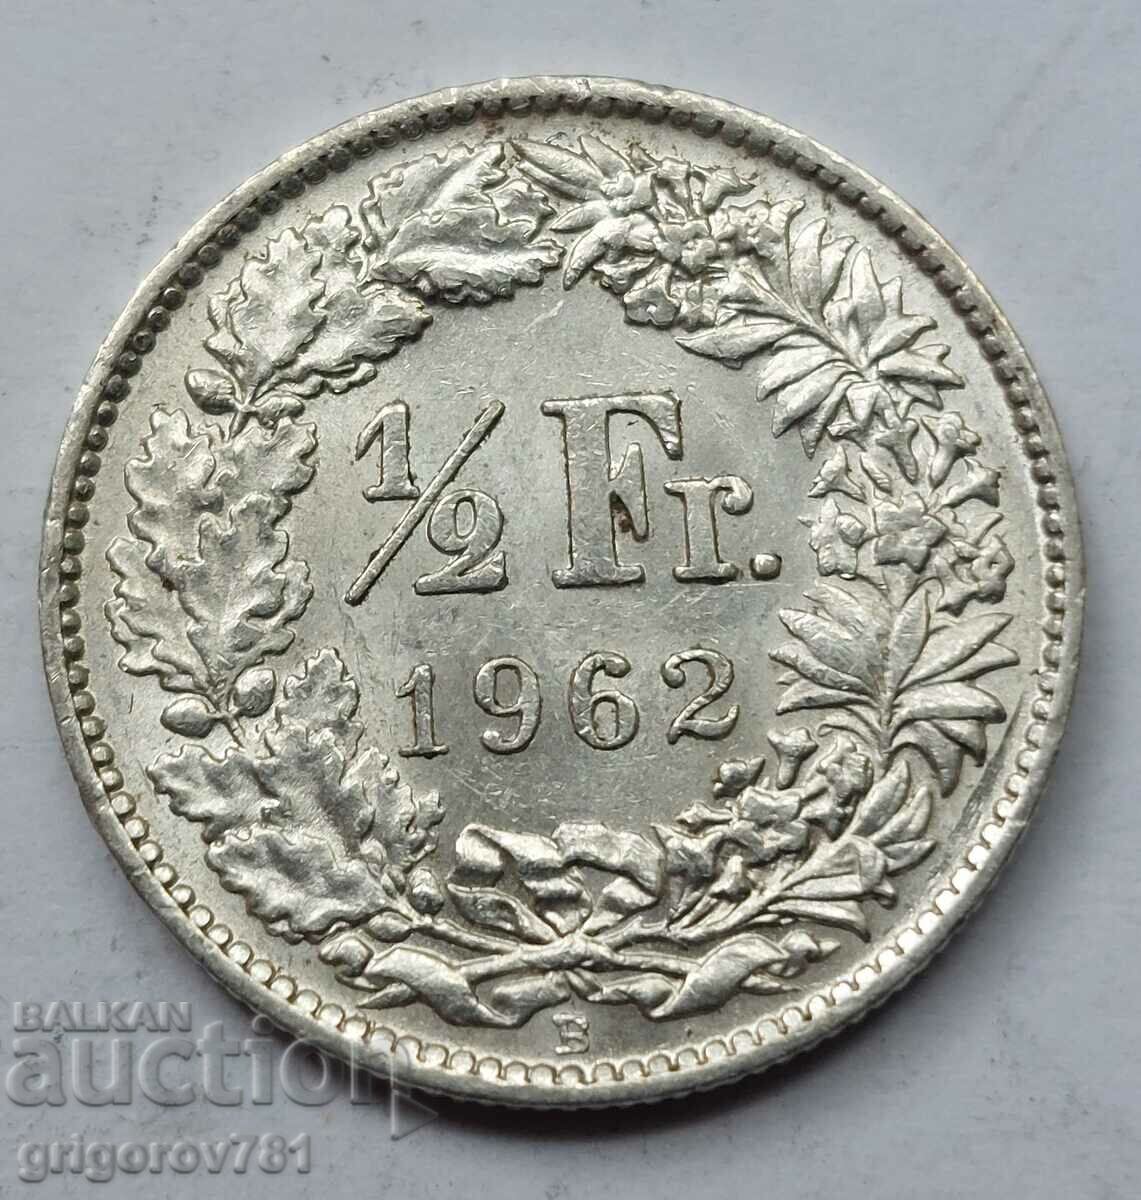 1/2 Franc Silver Switzerland 1962 B - Silver Coin #49